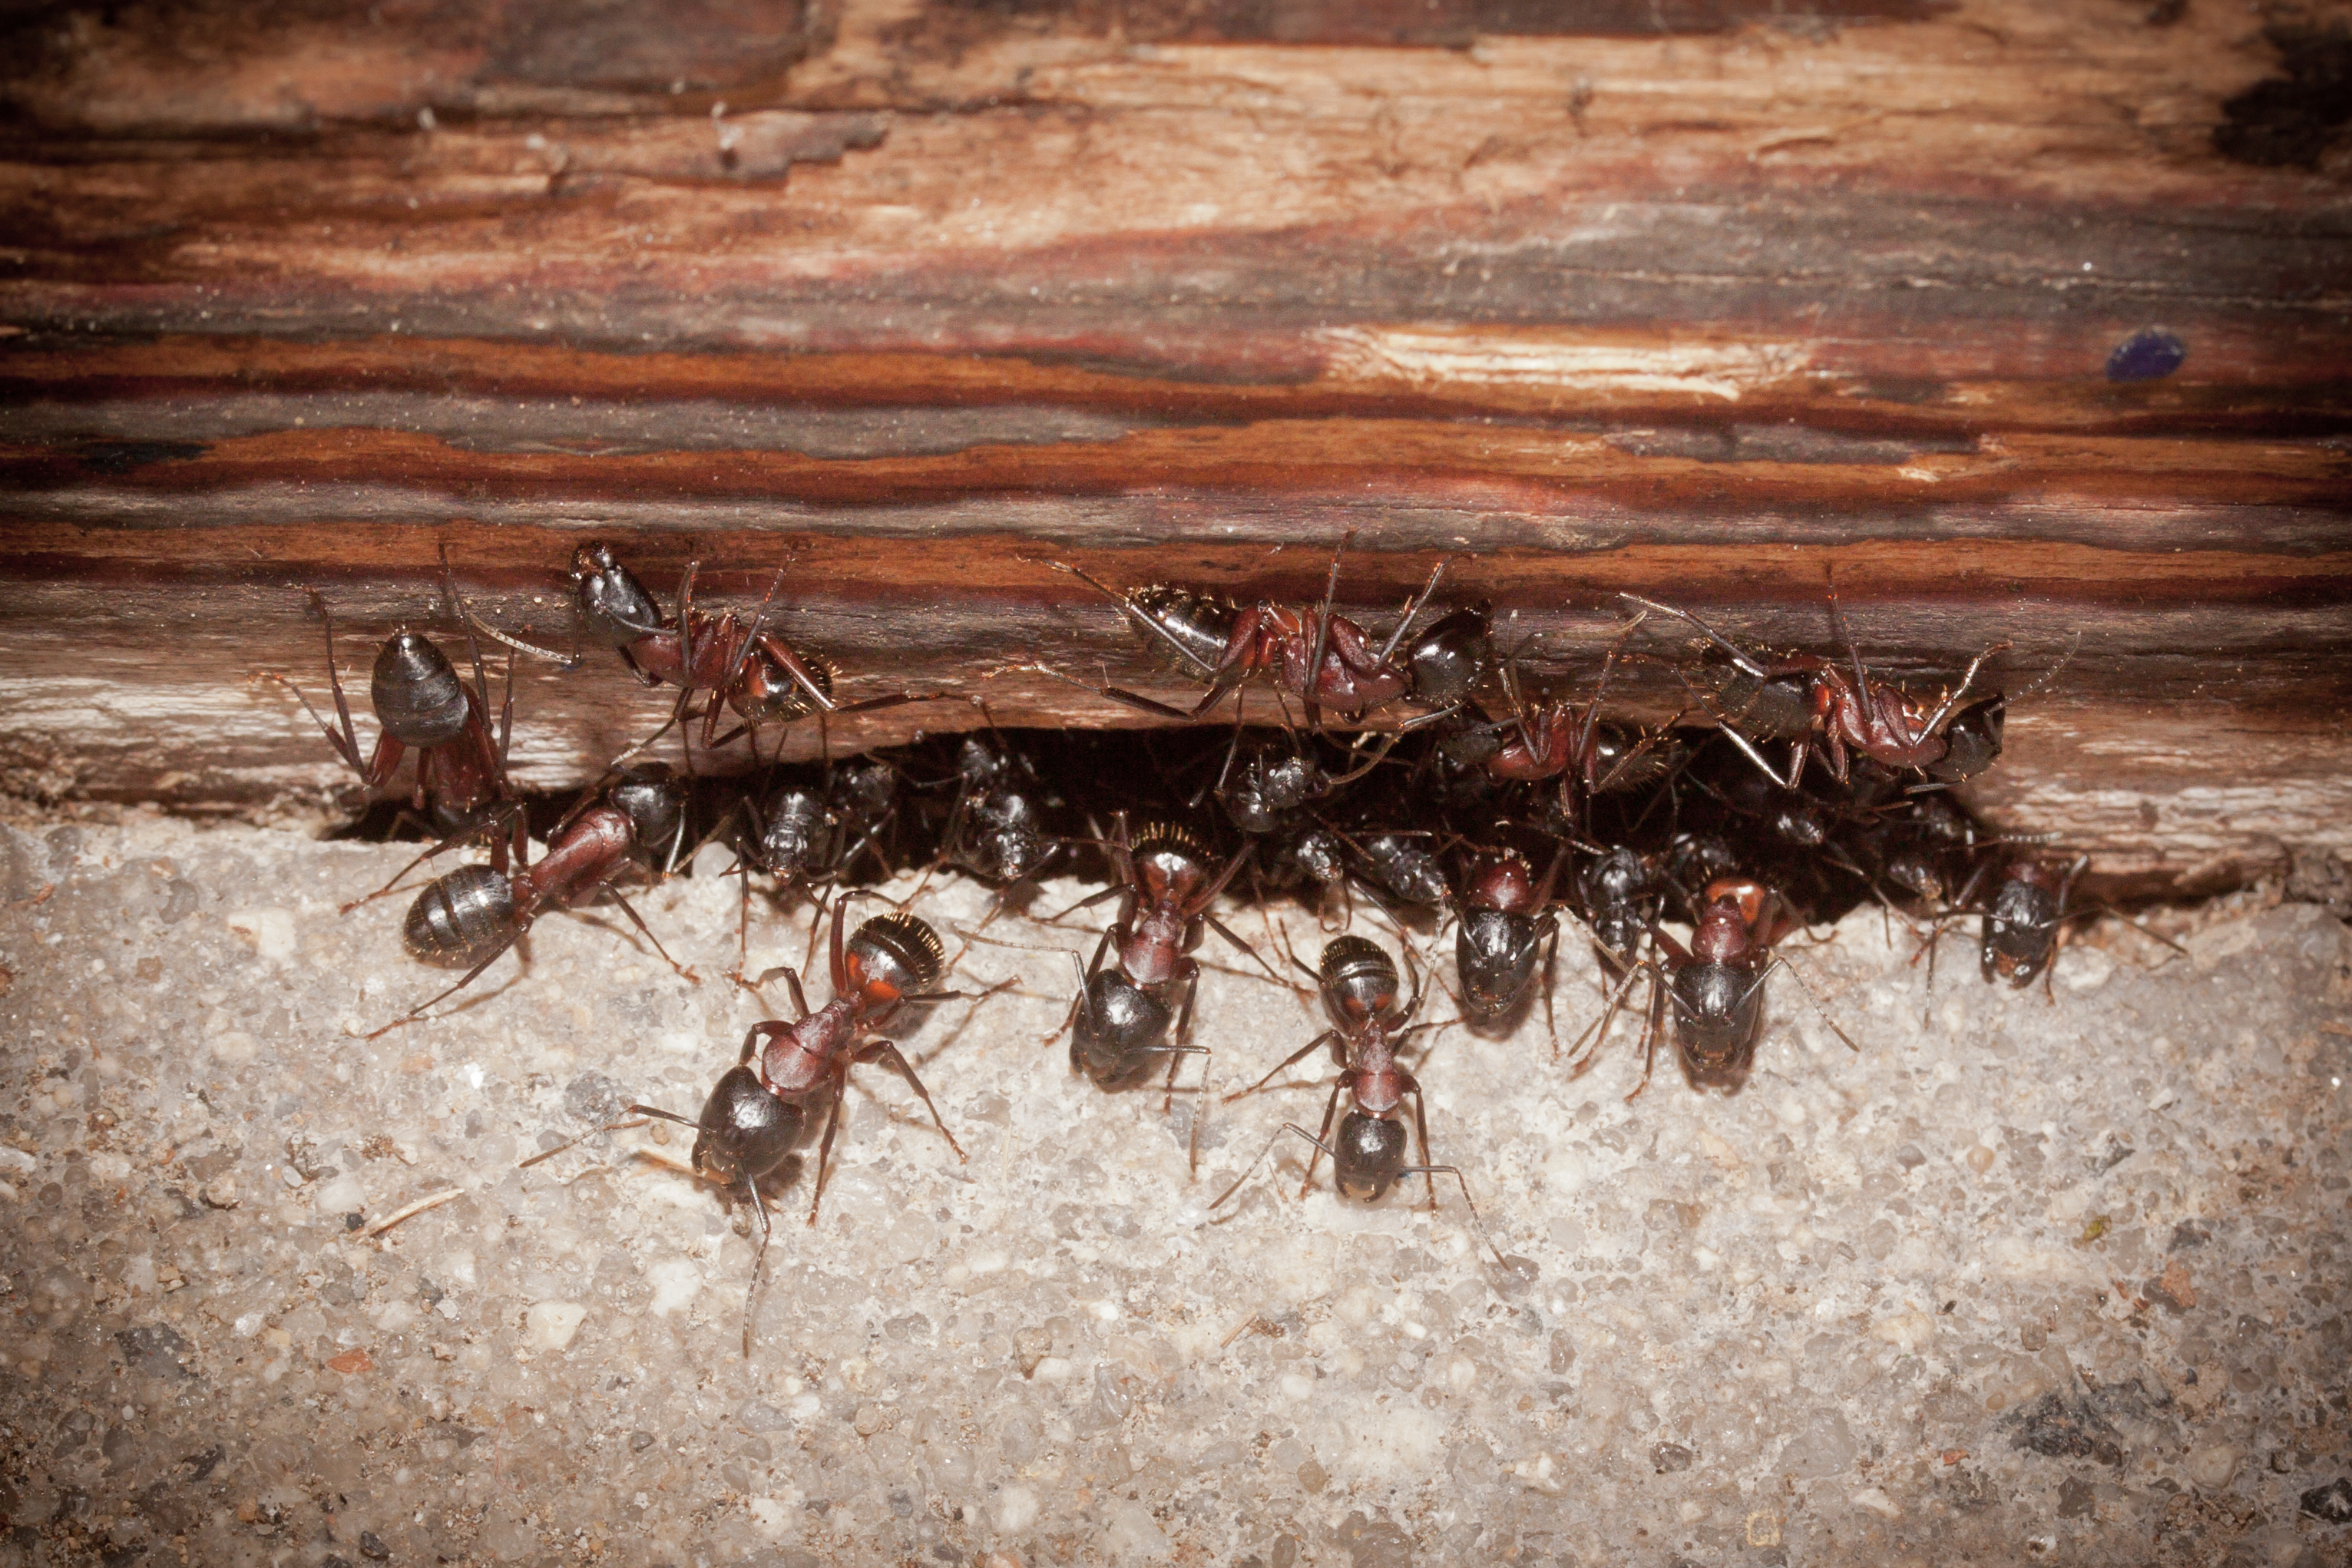 10 Strangest Places our Pest Control Technicians Found Ant Infestations